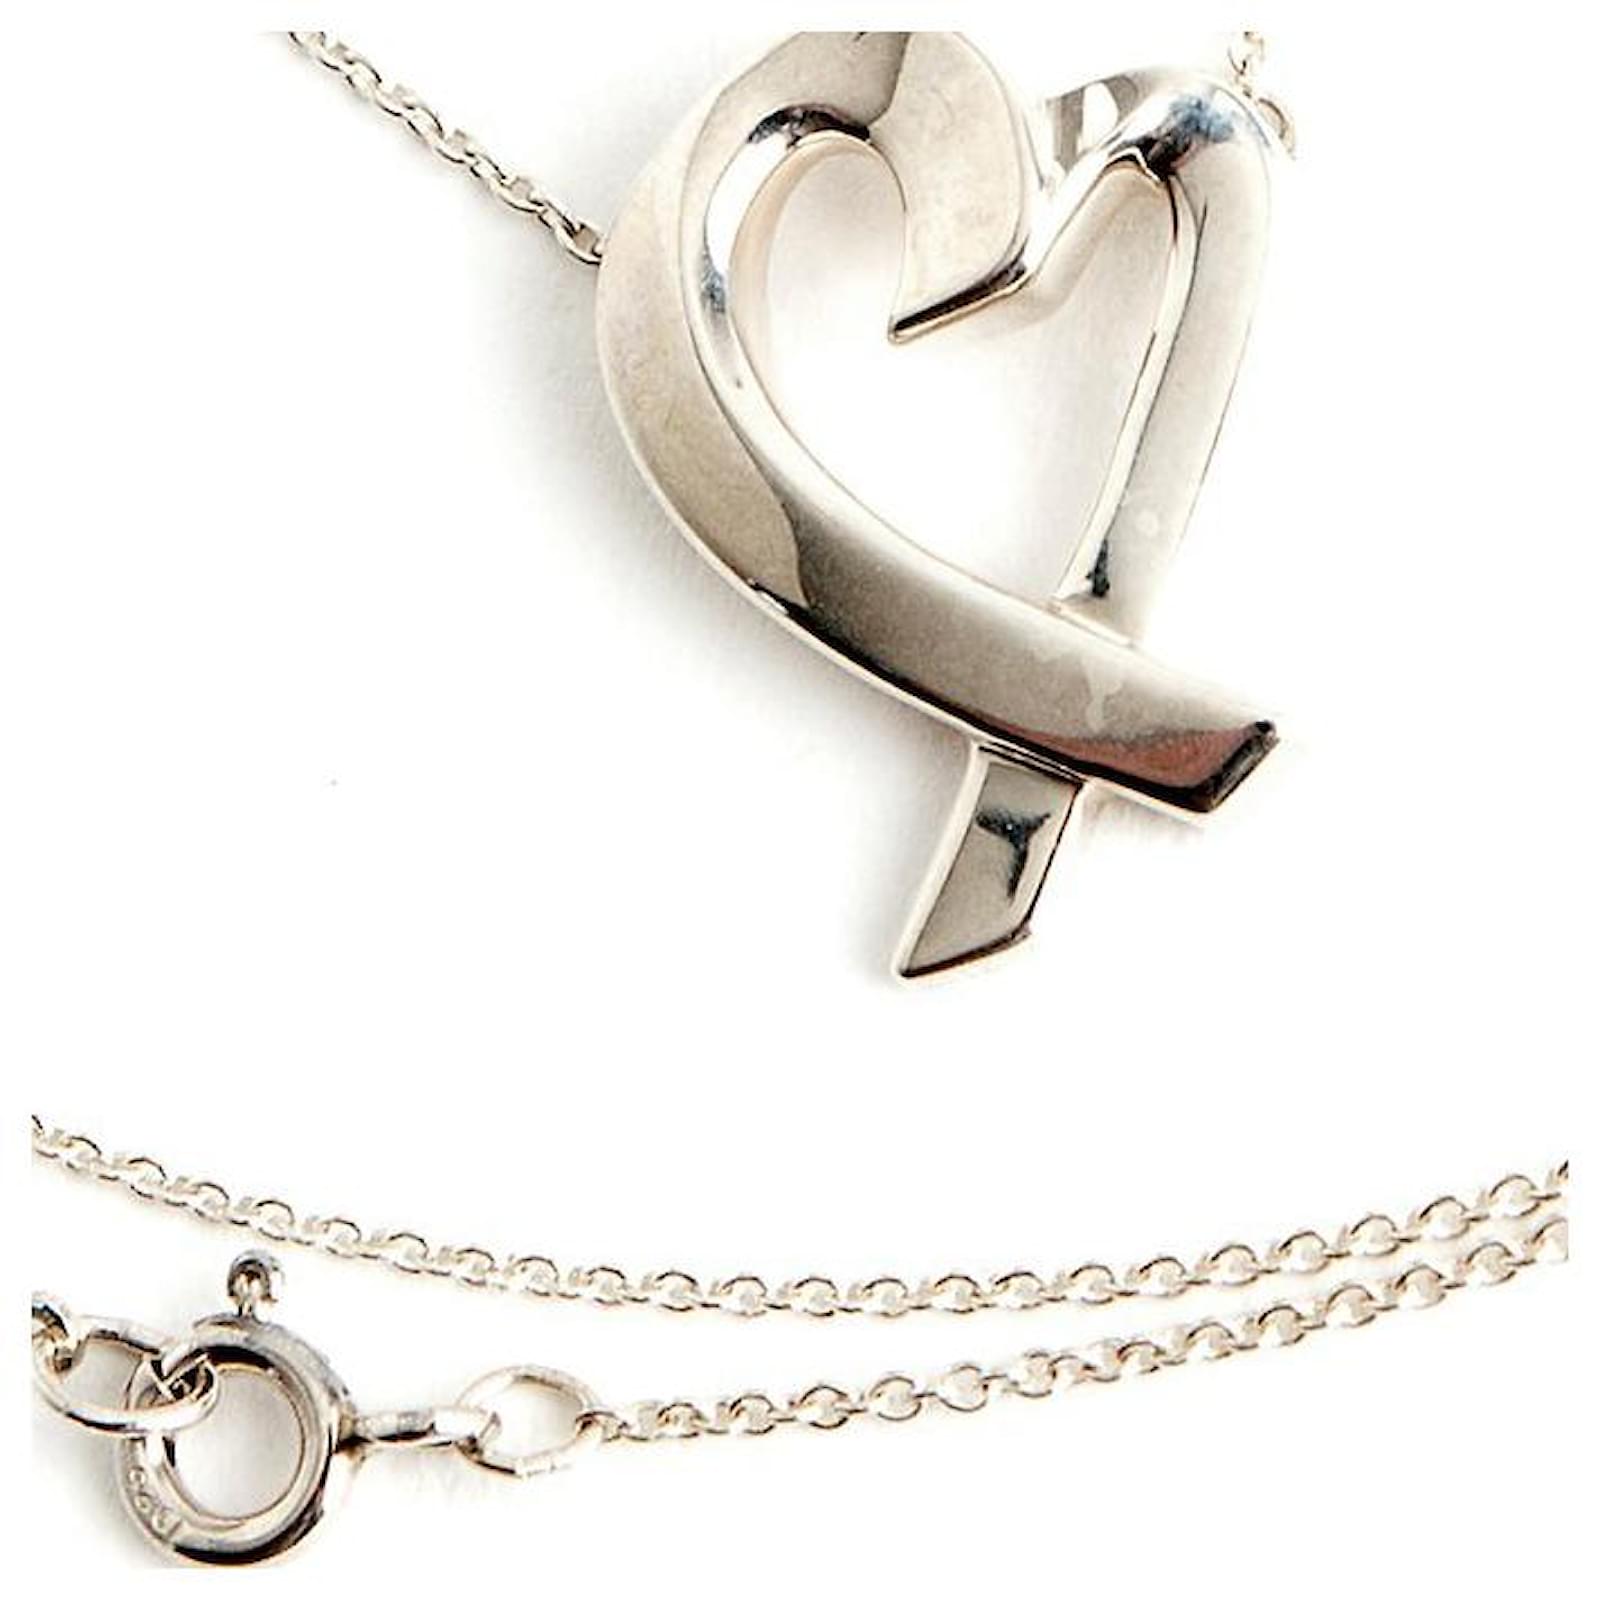 TIFFANY & CO. Pendant Necklace Loving Oval Heart Silver 925